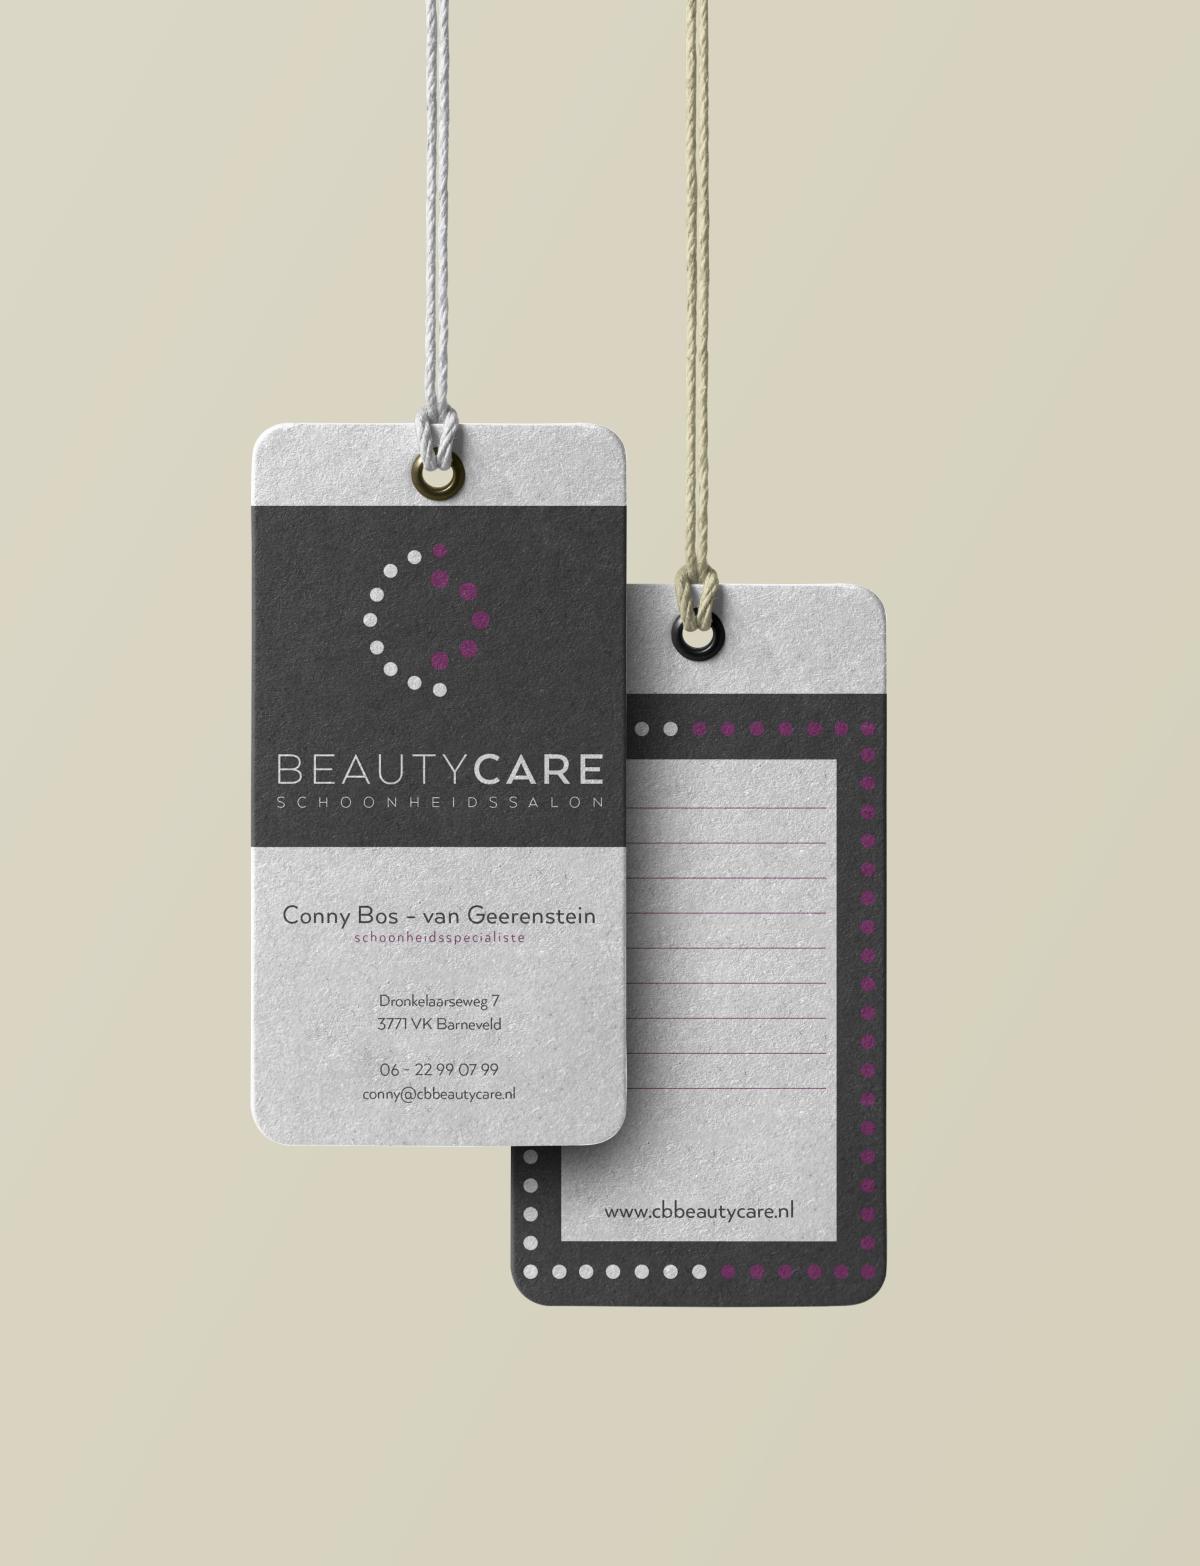 Beauty Care - corporate identity